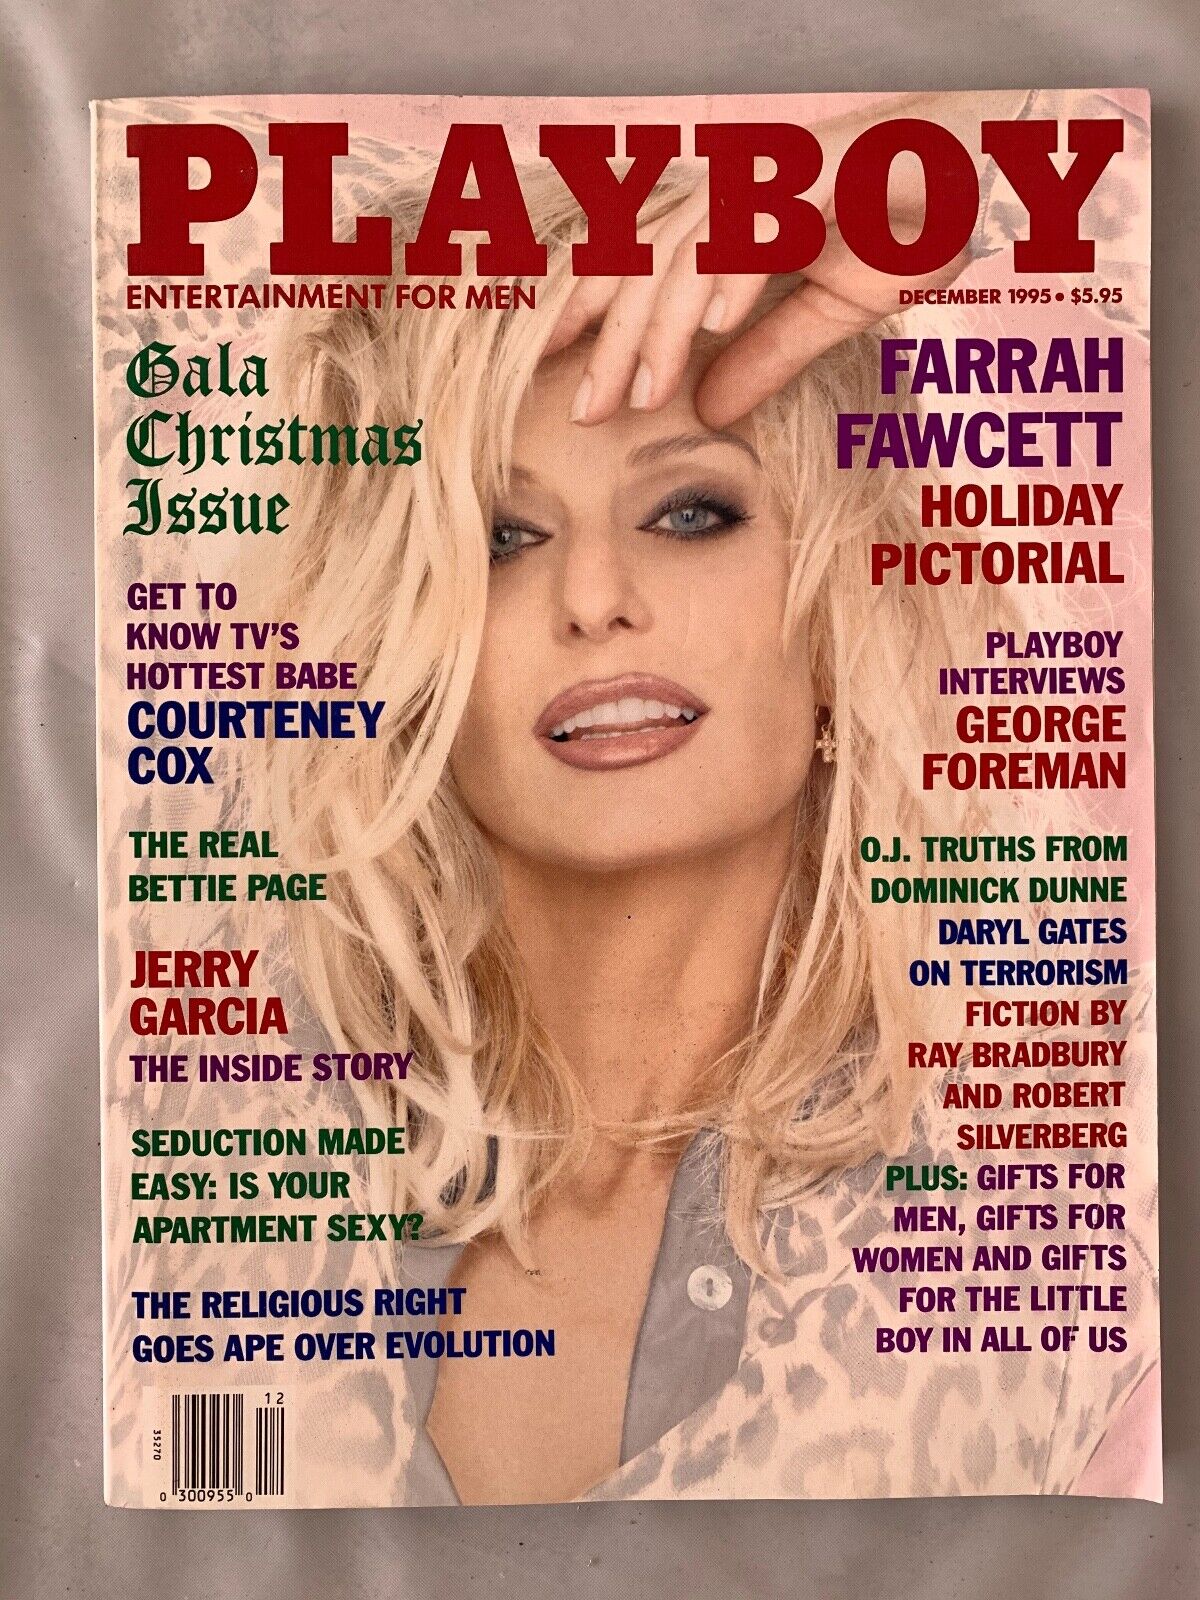 catherine monroe recommends Farrah Fawcett Playboy 1995